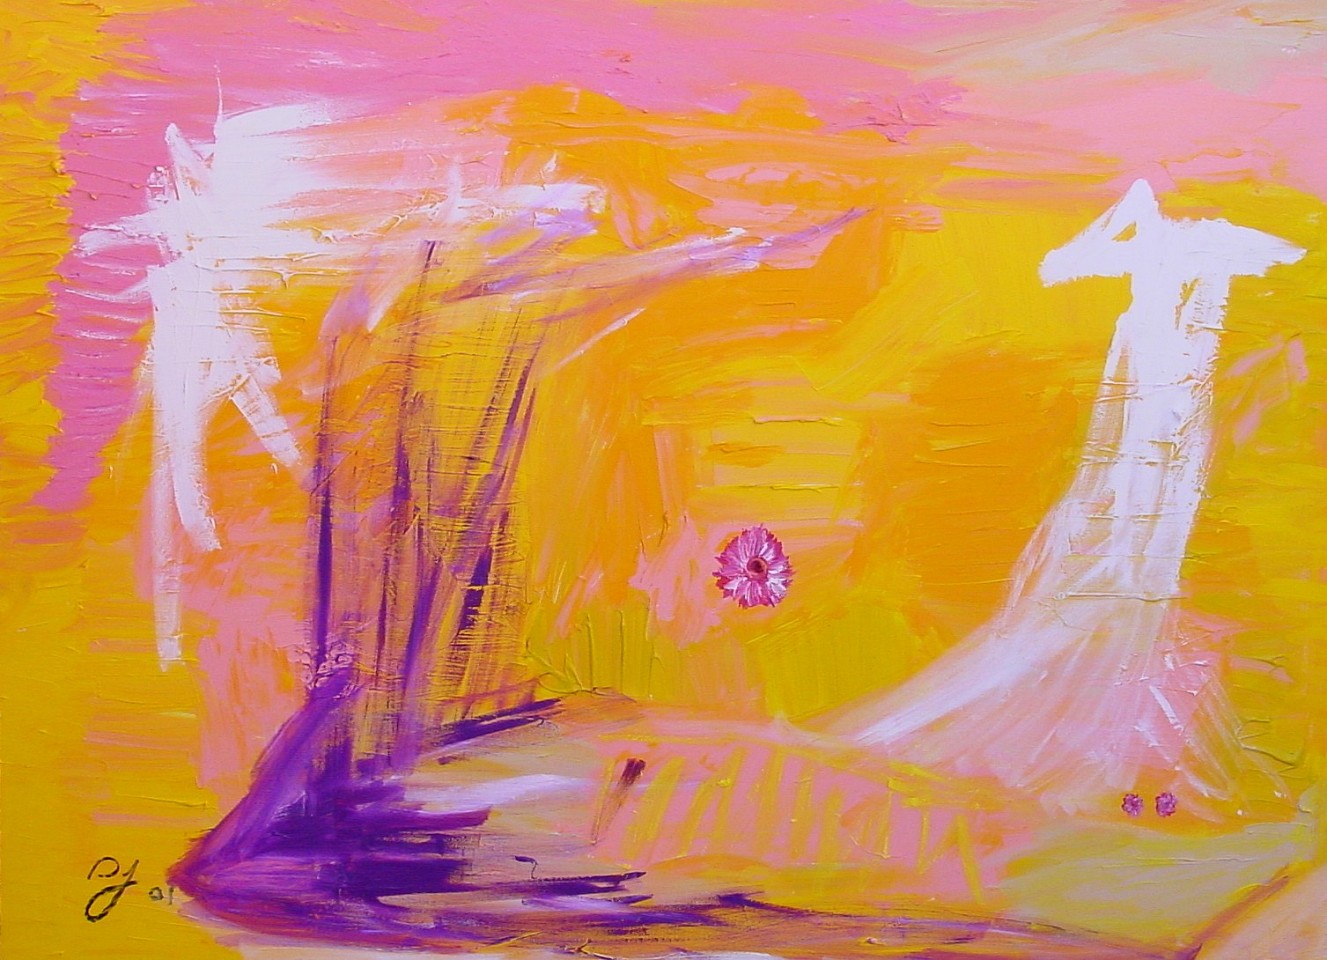 Diego Jacobson, Desert Love, 2001
Acrylic on Canvas, 36 x 48 in. (91.4 x 121.9 cm)
0128